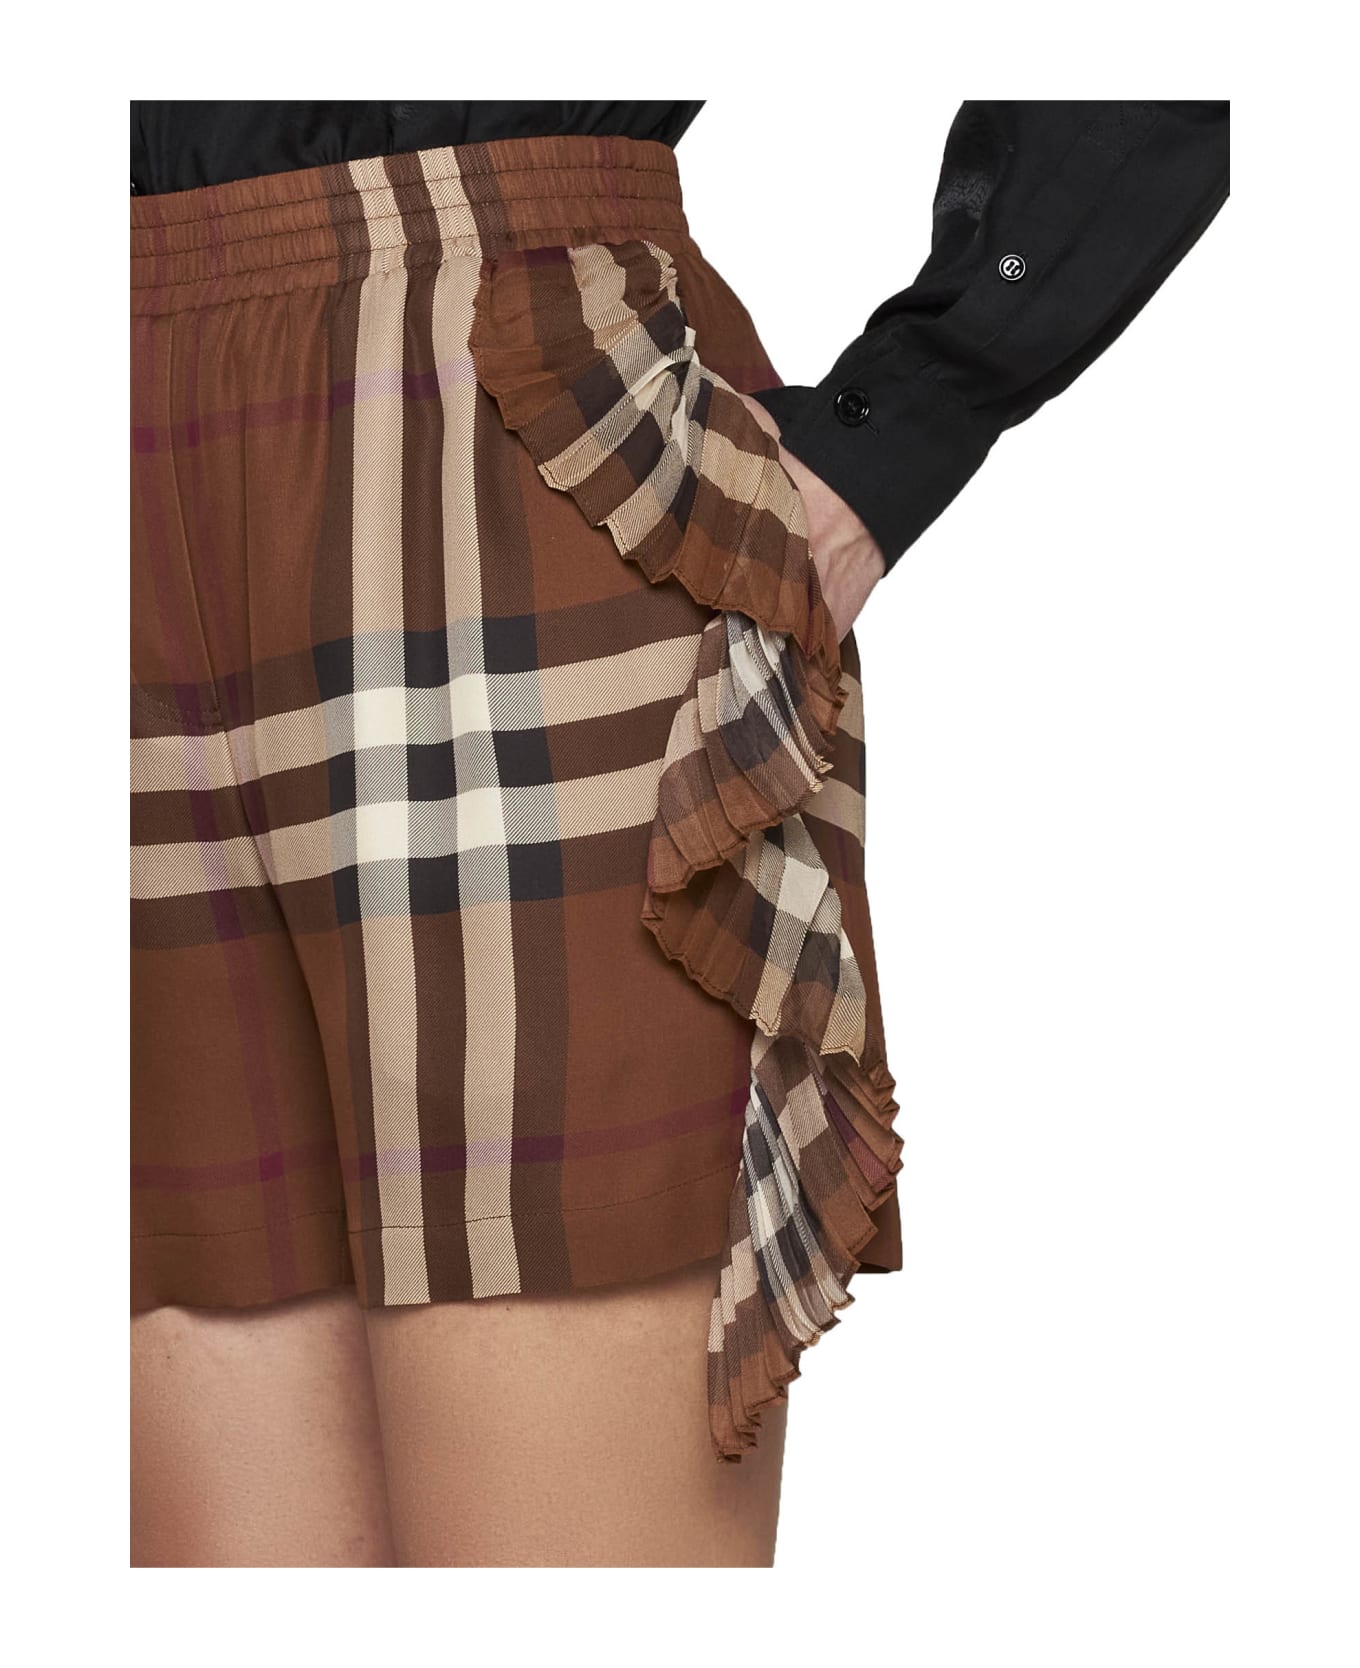 Burberry Short - ONLY Play Womens Fleece Jacket